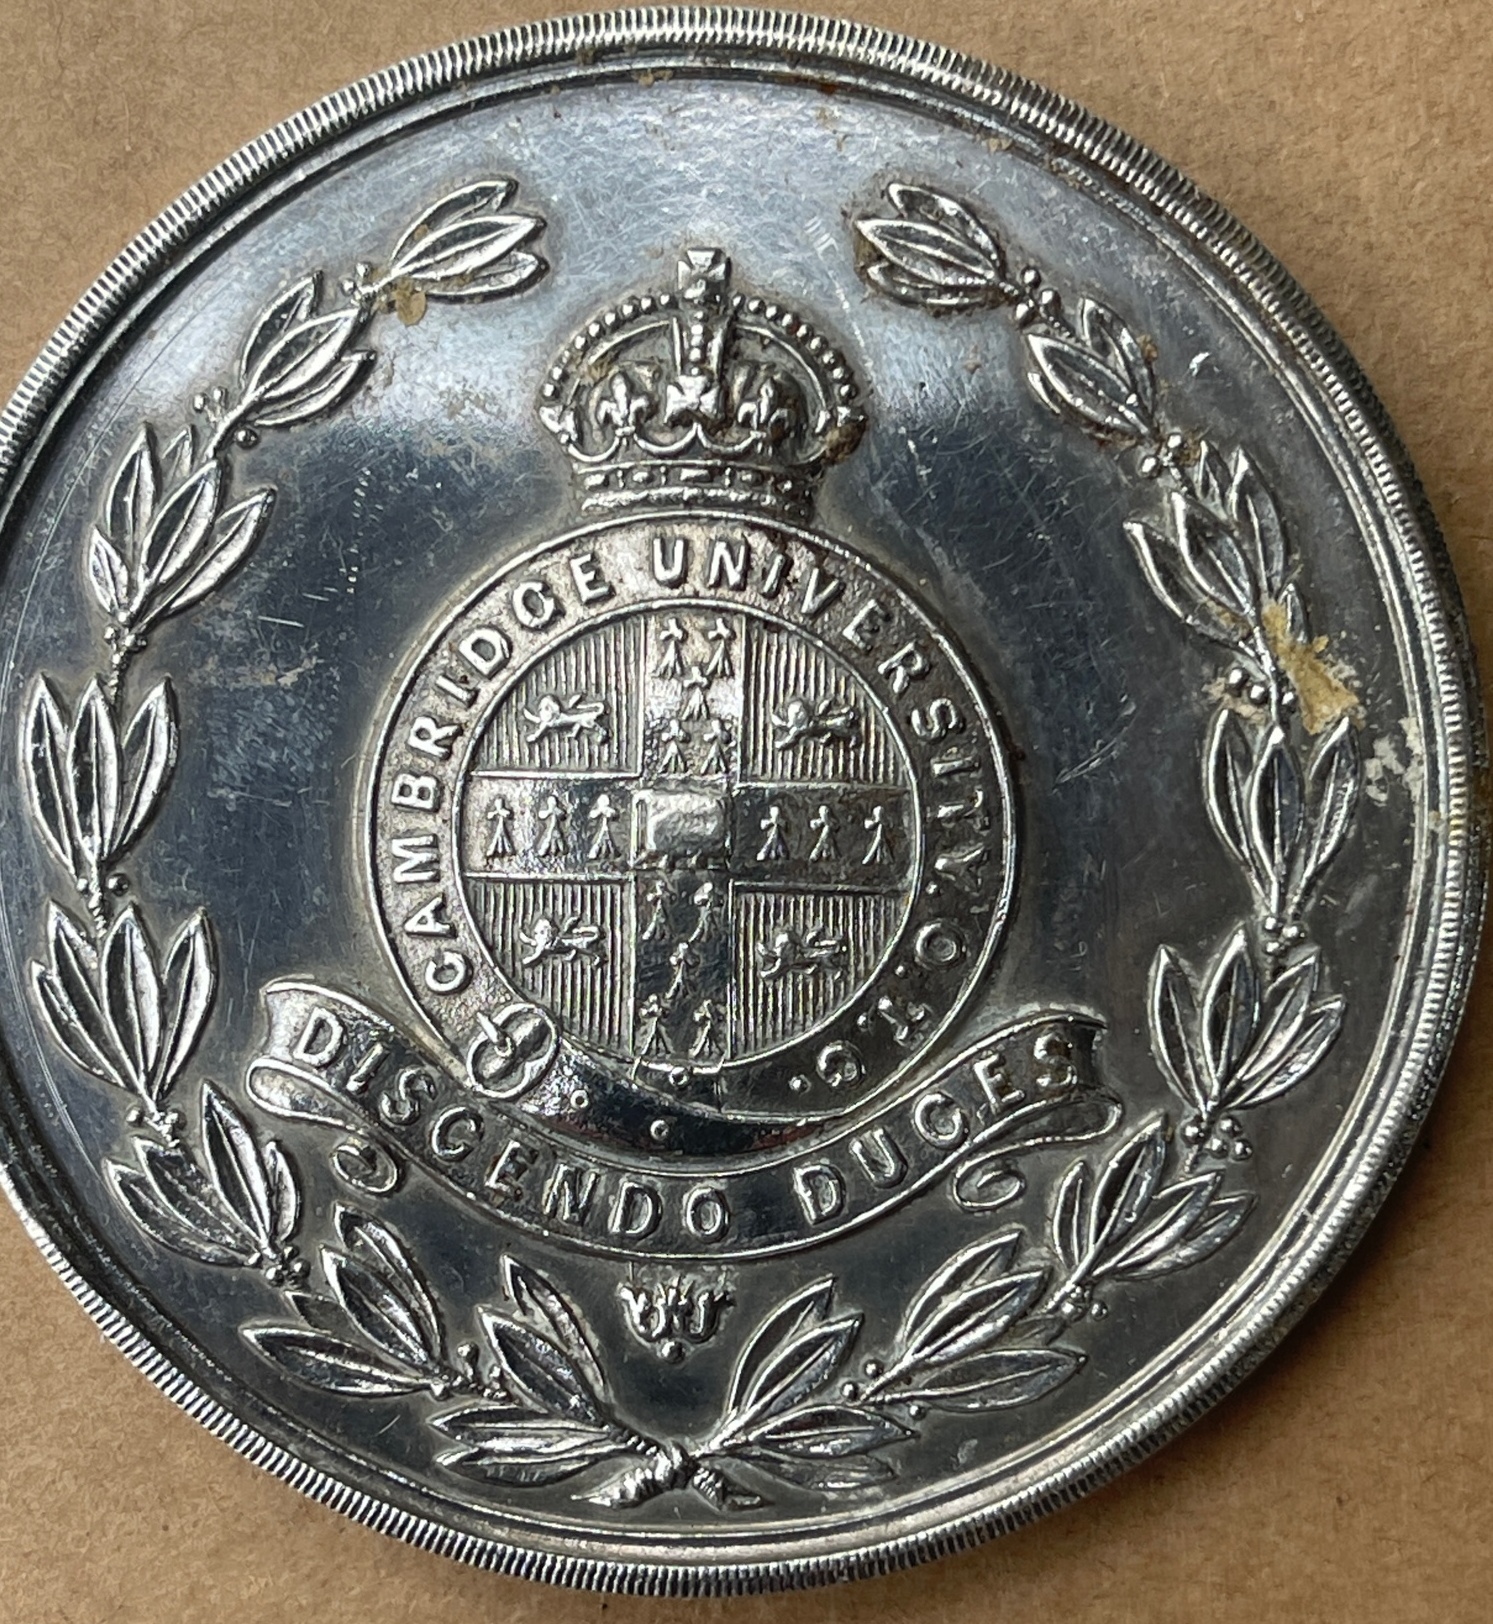 Cambridge University Chancellors Plate 1923 Medal vs Oxford - 50mm diameter. - Image 2 of 2